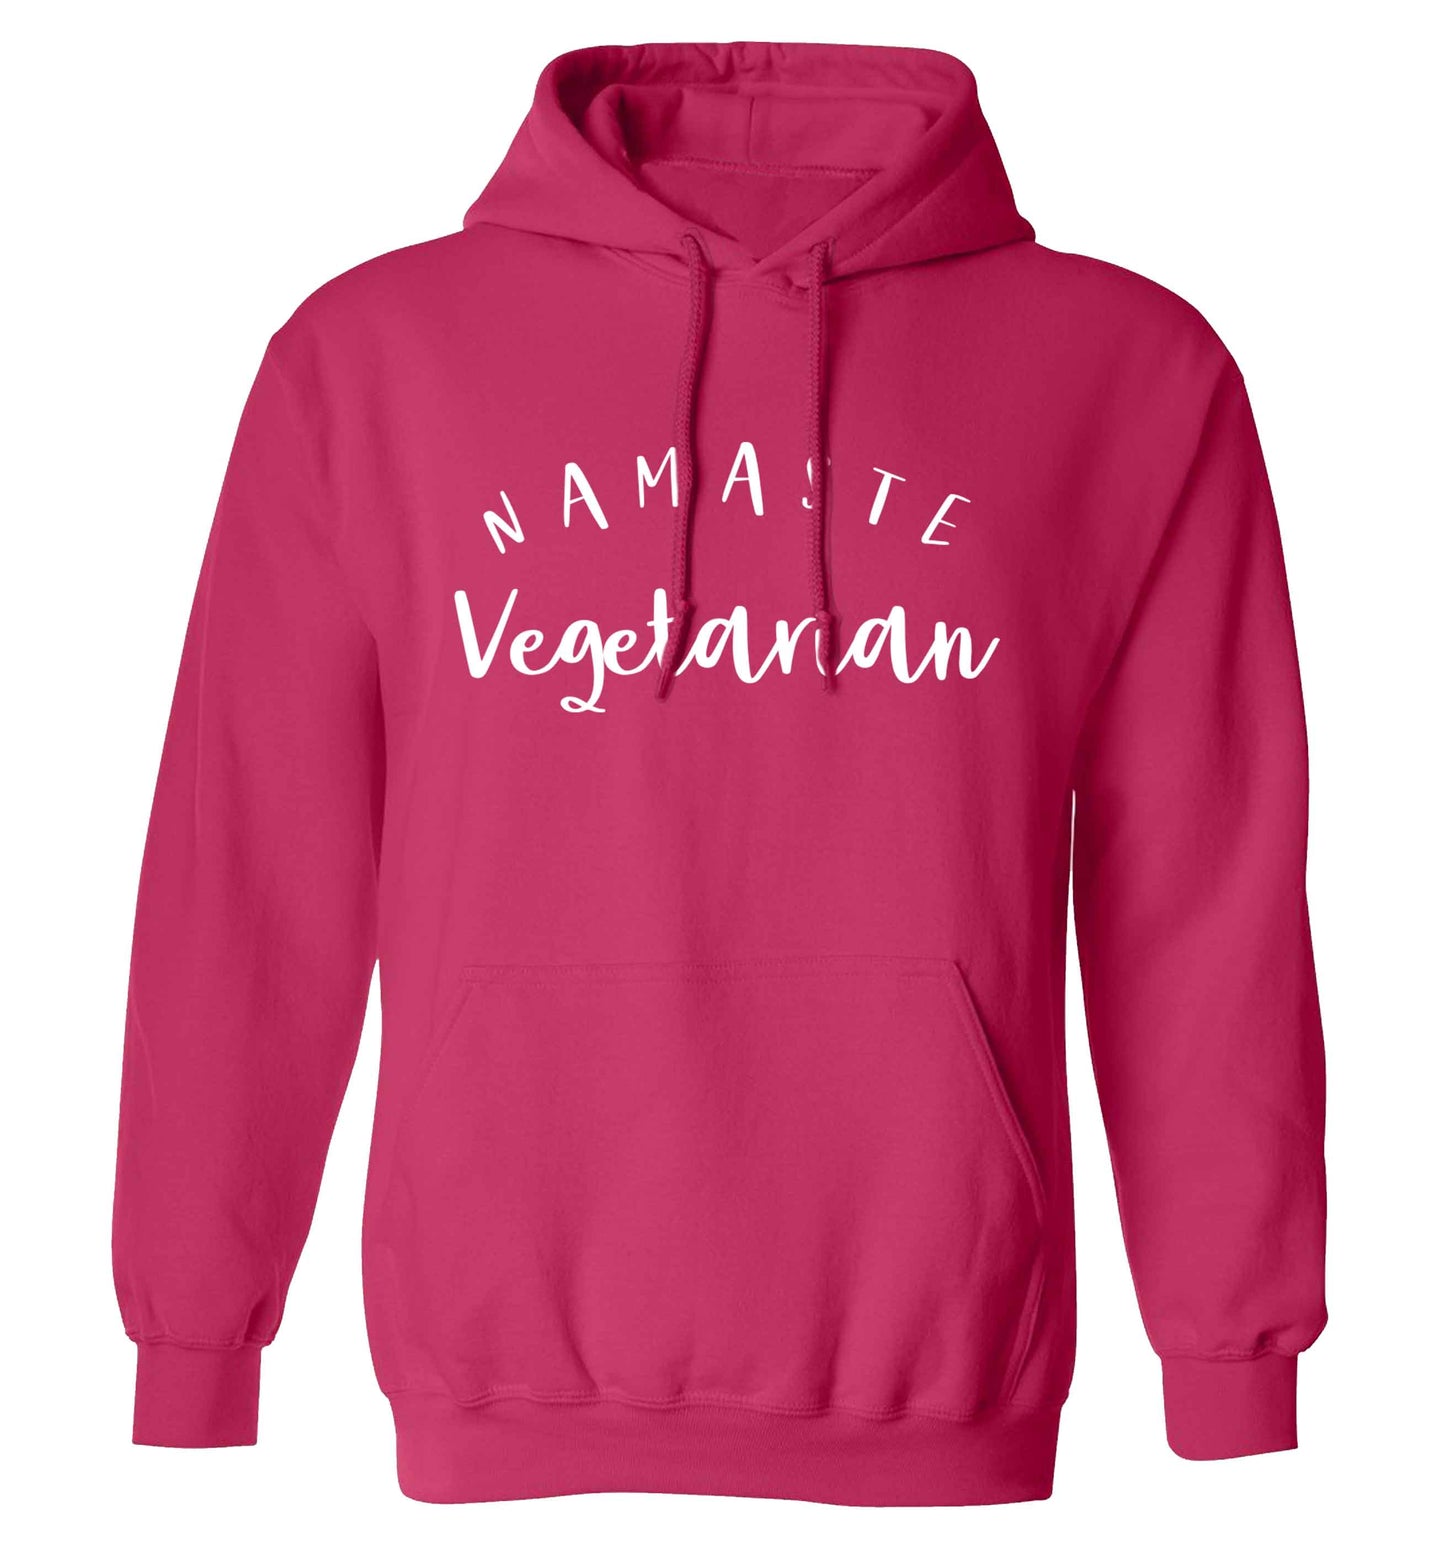 Namaste vegetarian adults unisex pink hoodie 2XL